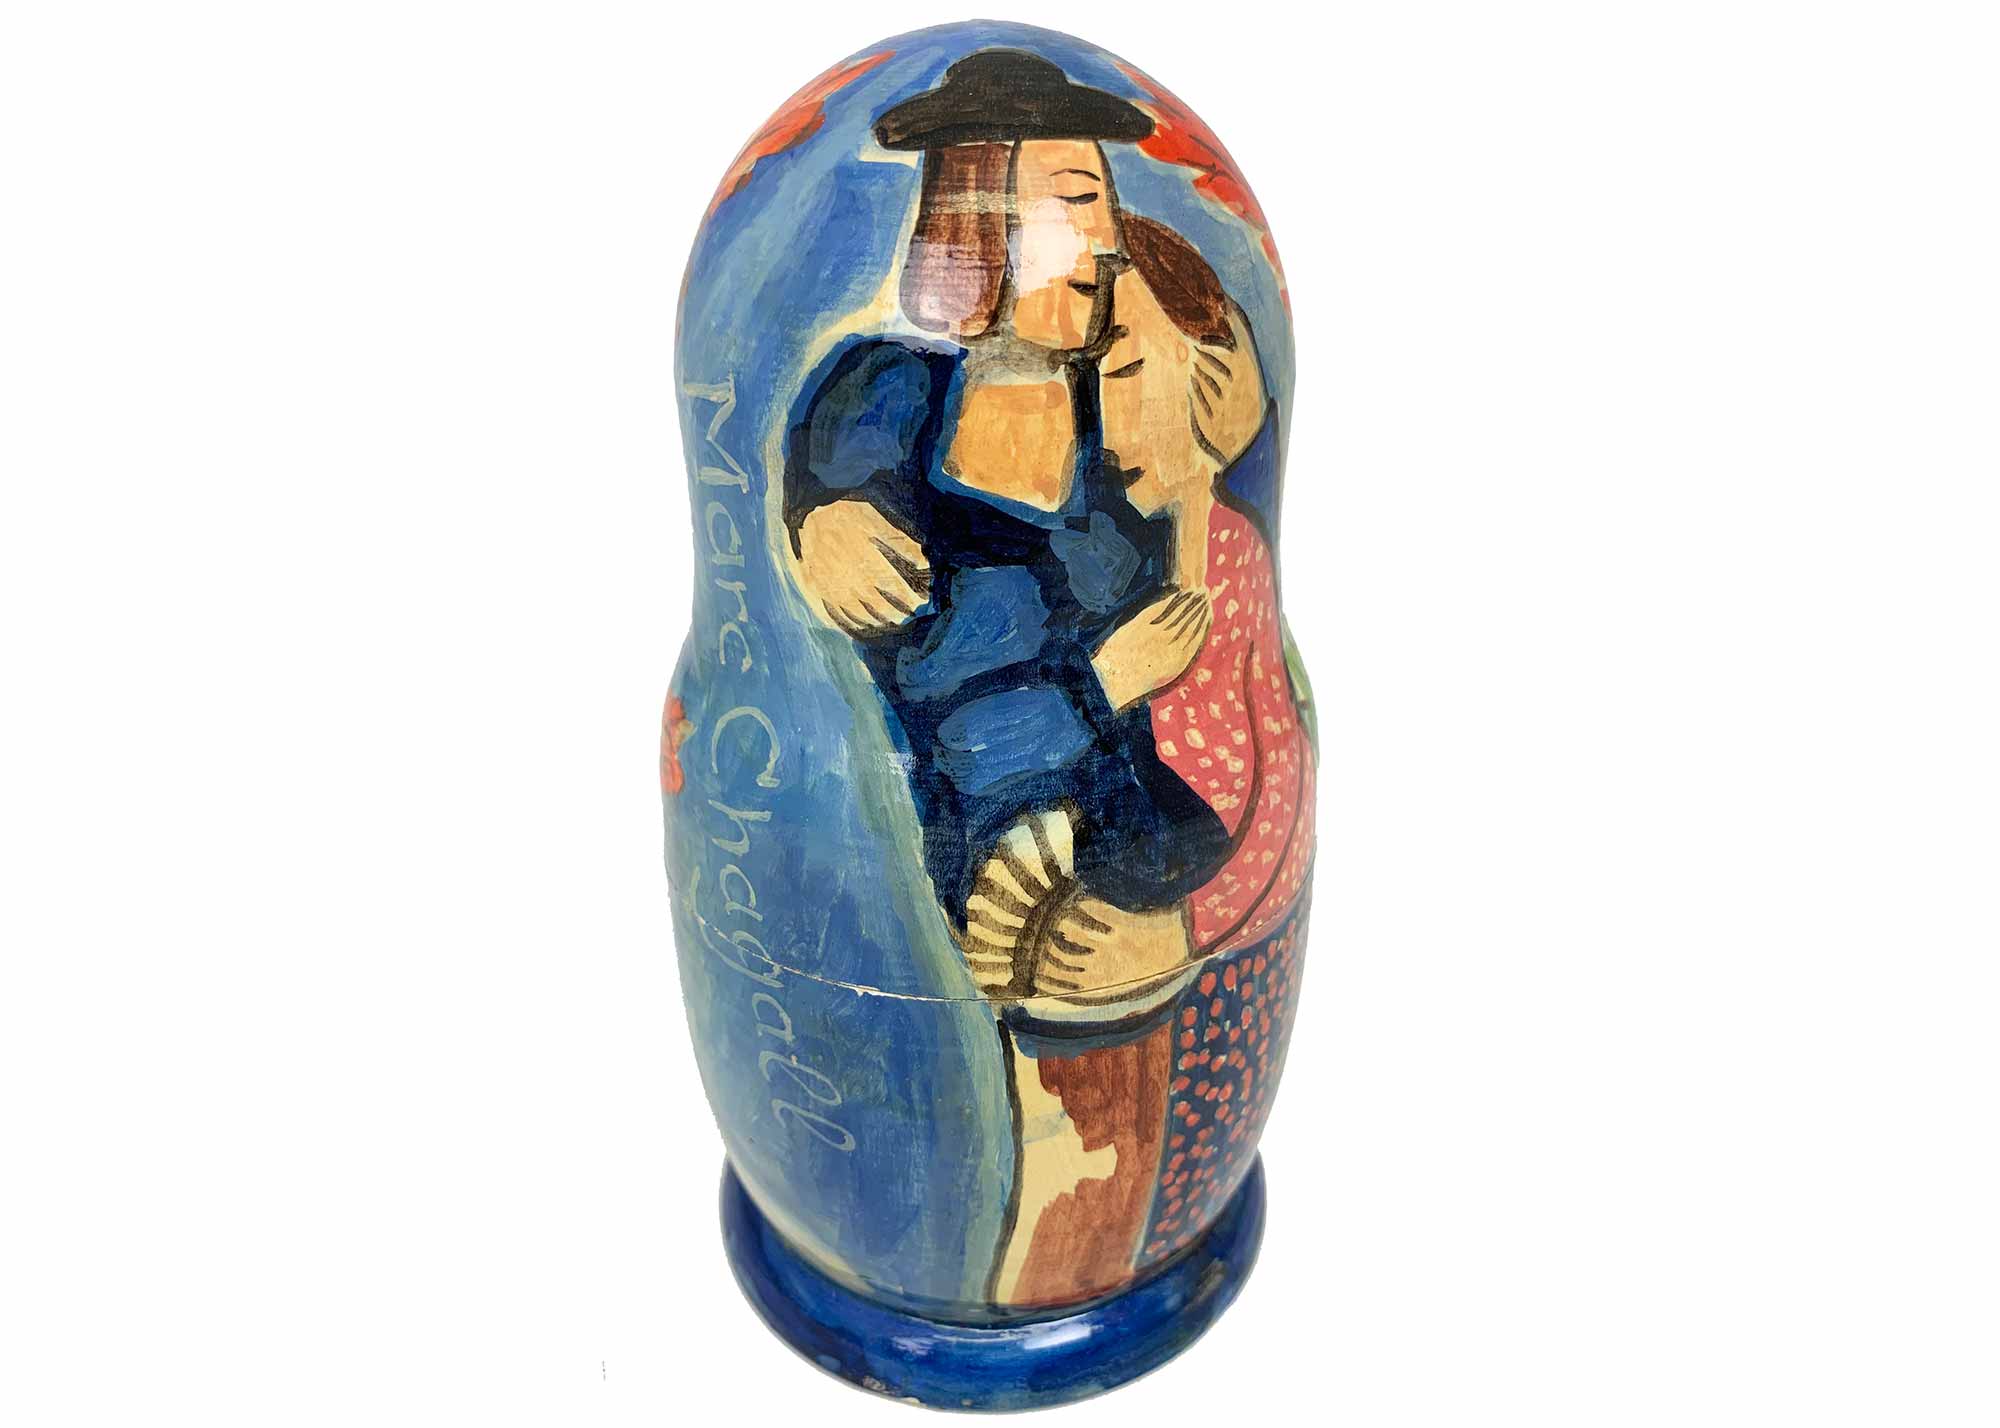 Buy Vintage Chagall "Blue Couple" Nesting Doll 5pc./6' at GoldenCockerel.com